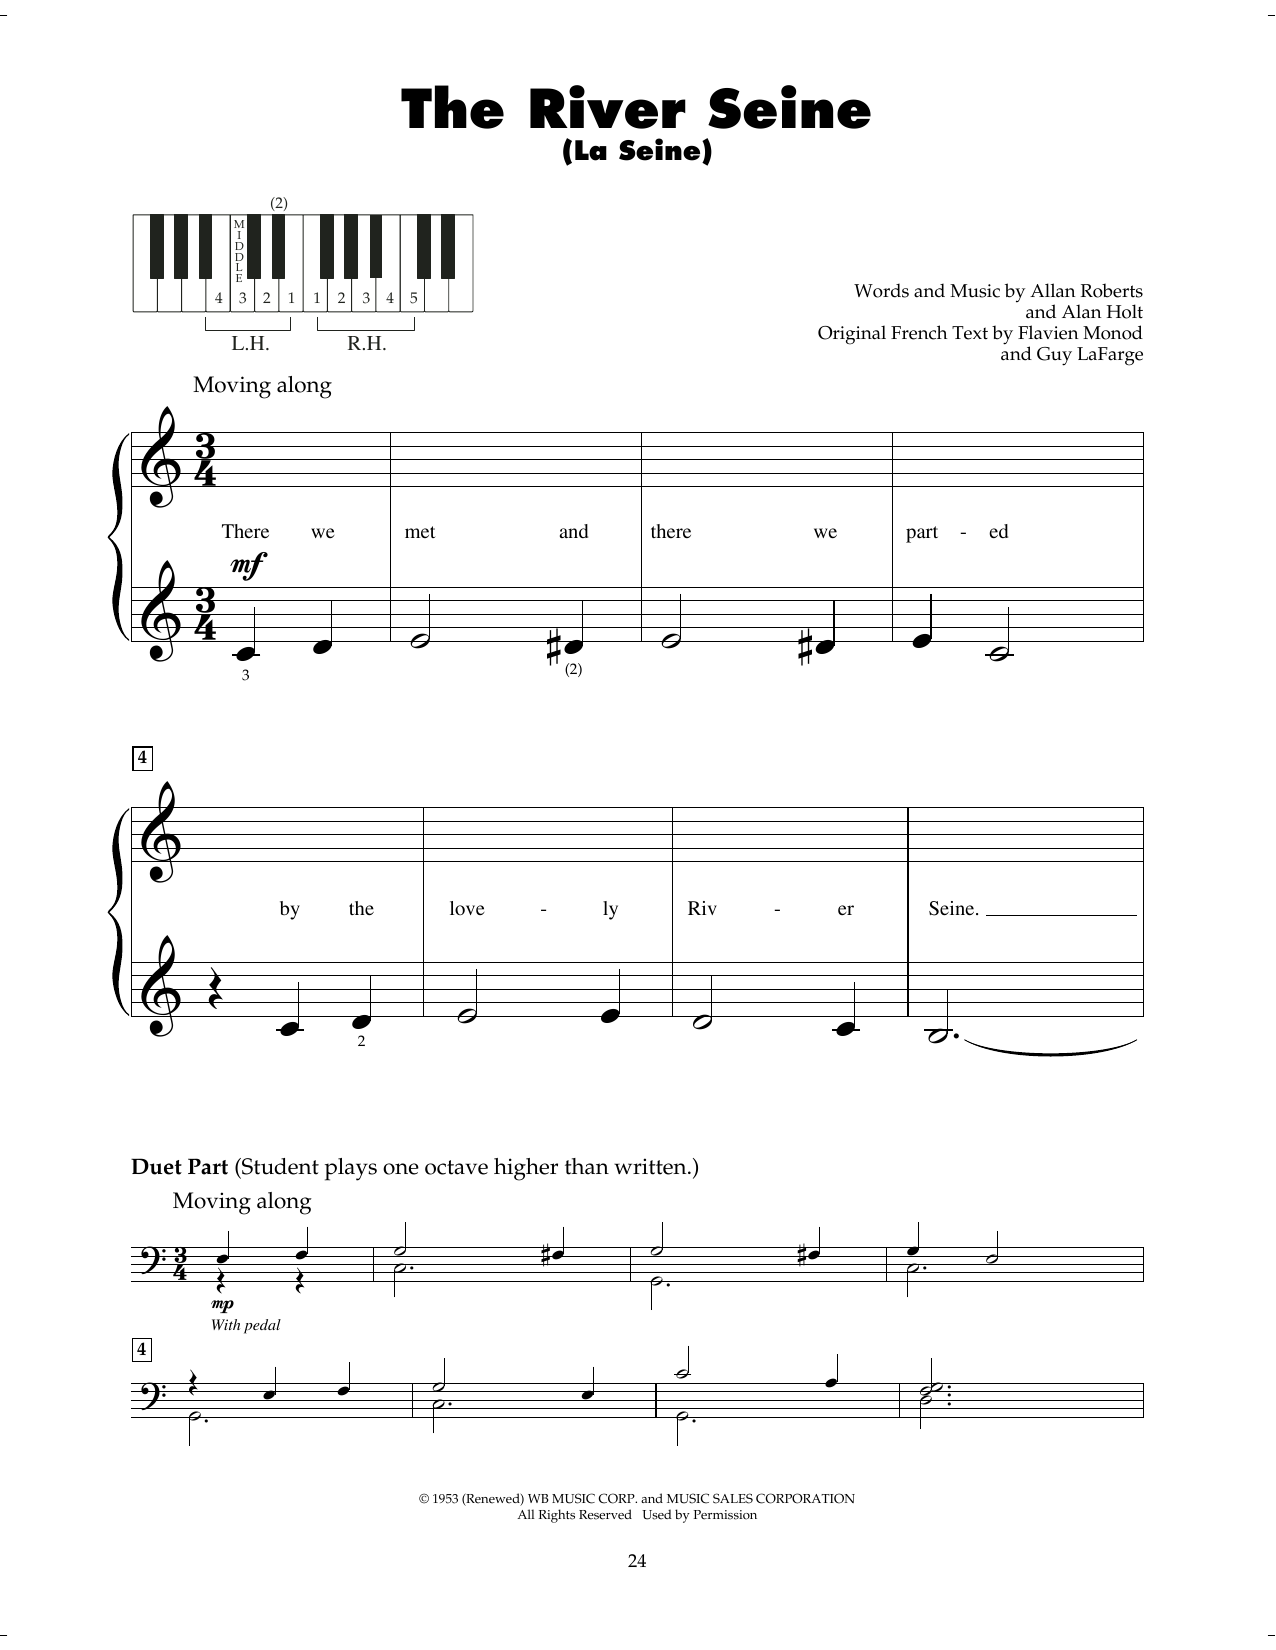 Allan Roberts The River Seine (La Seine) sheet music notes printable PDF score